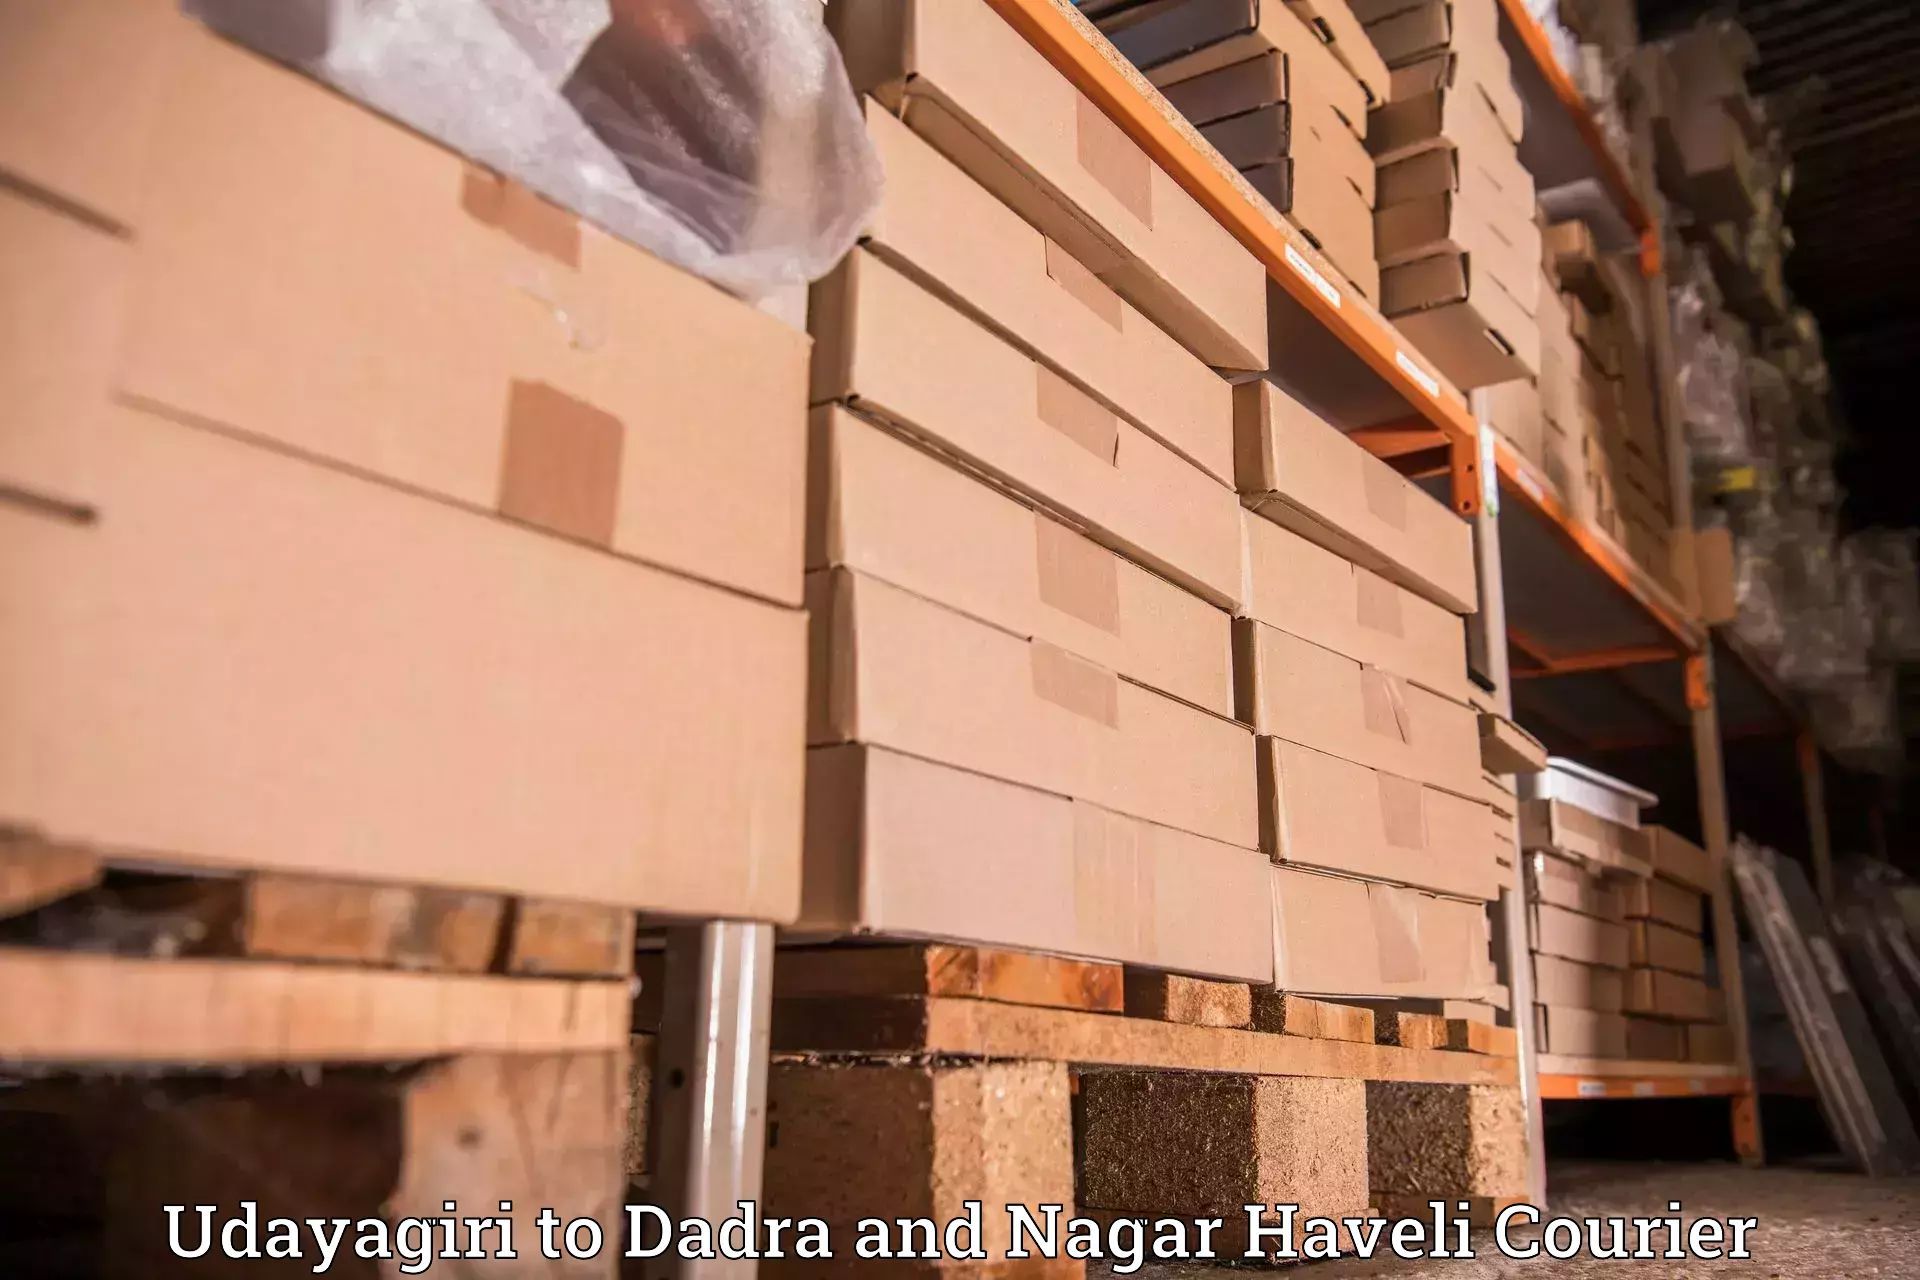 Cargo delivery service Udayagiri to Dadra and Nagar Haveli